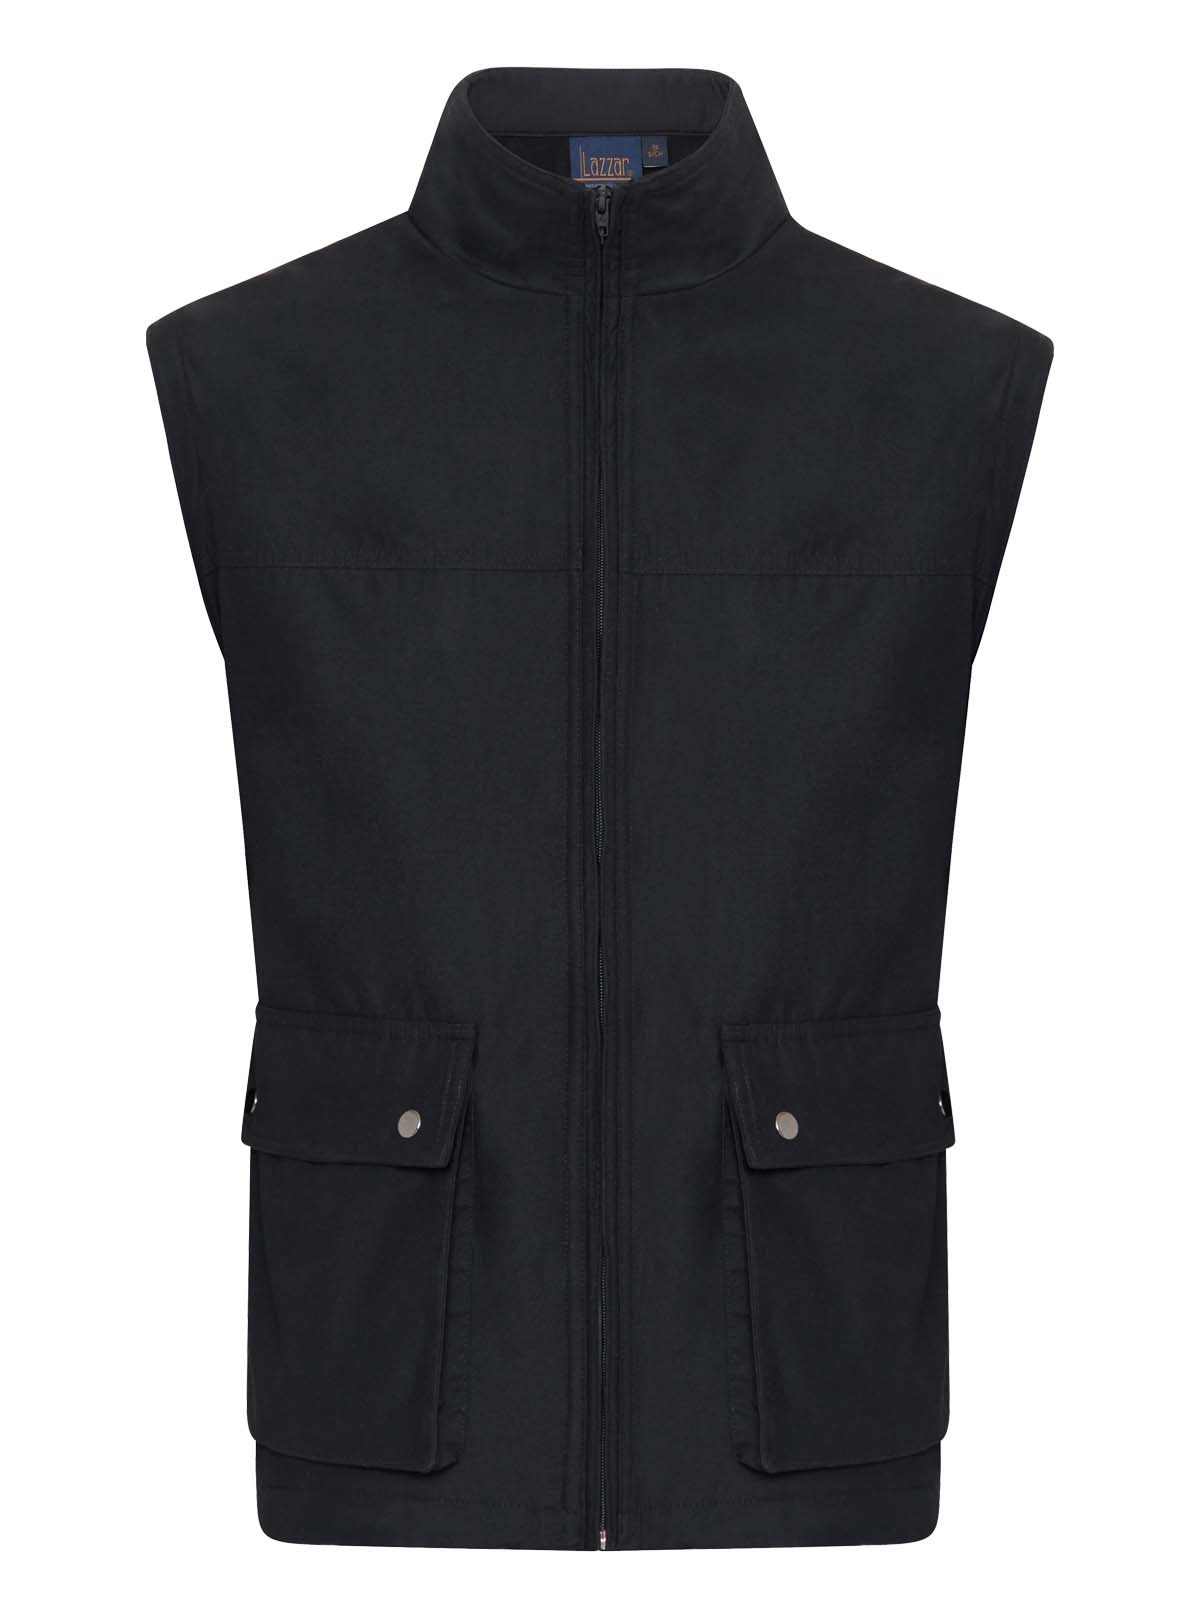 jacket removable sleeves black